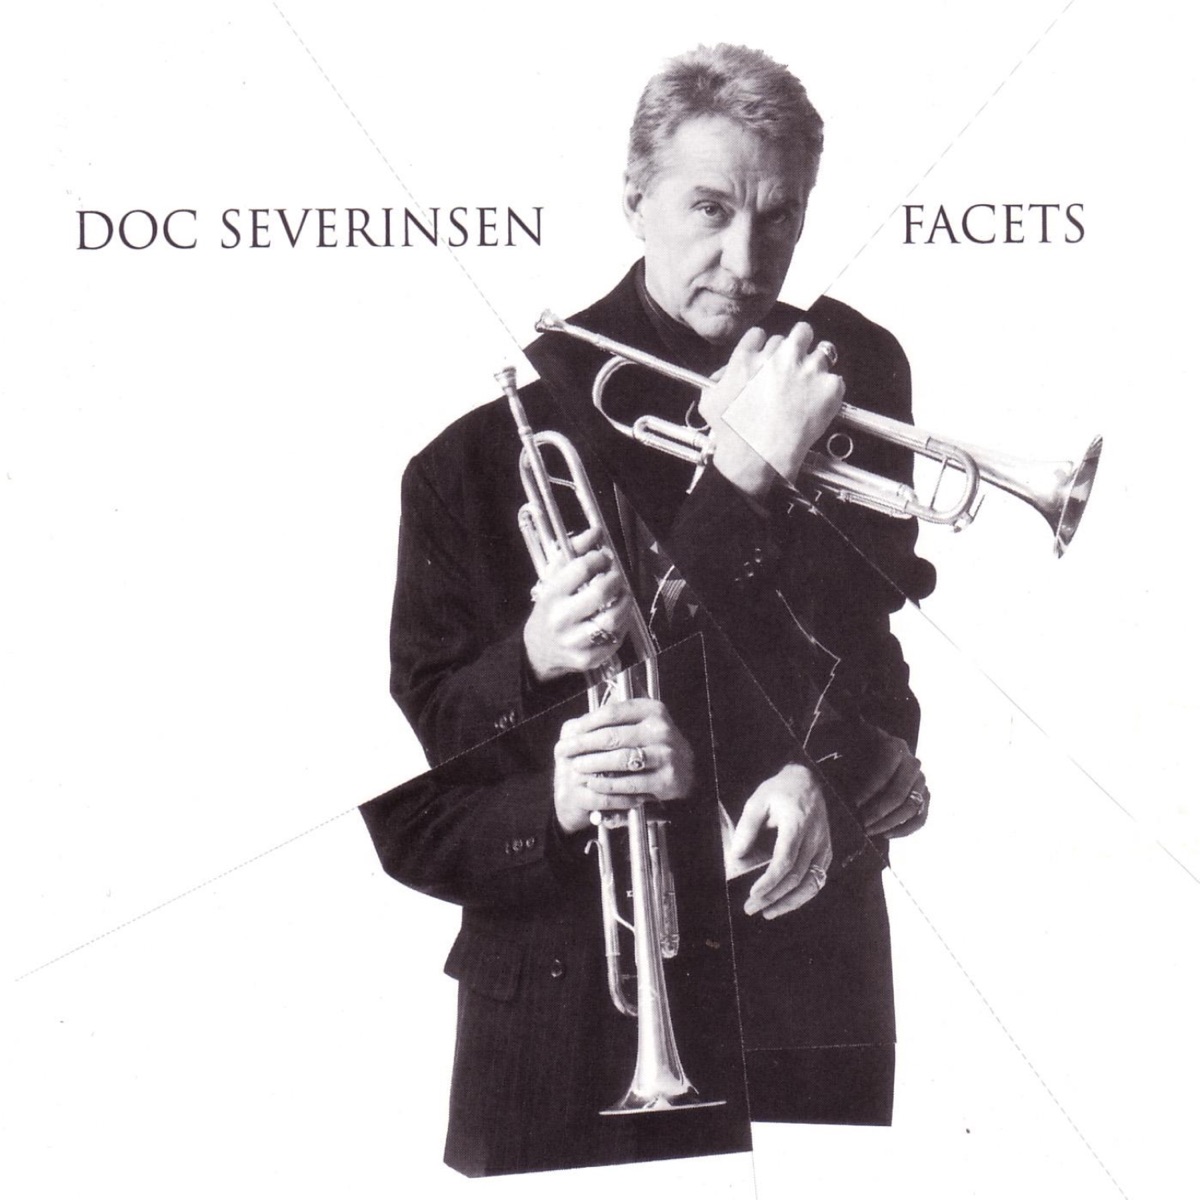 Doc Severinsen